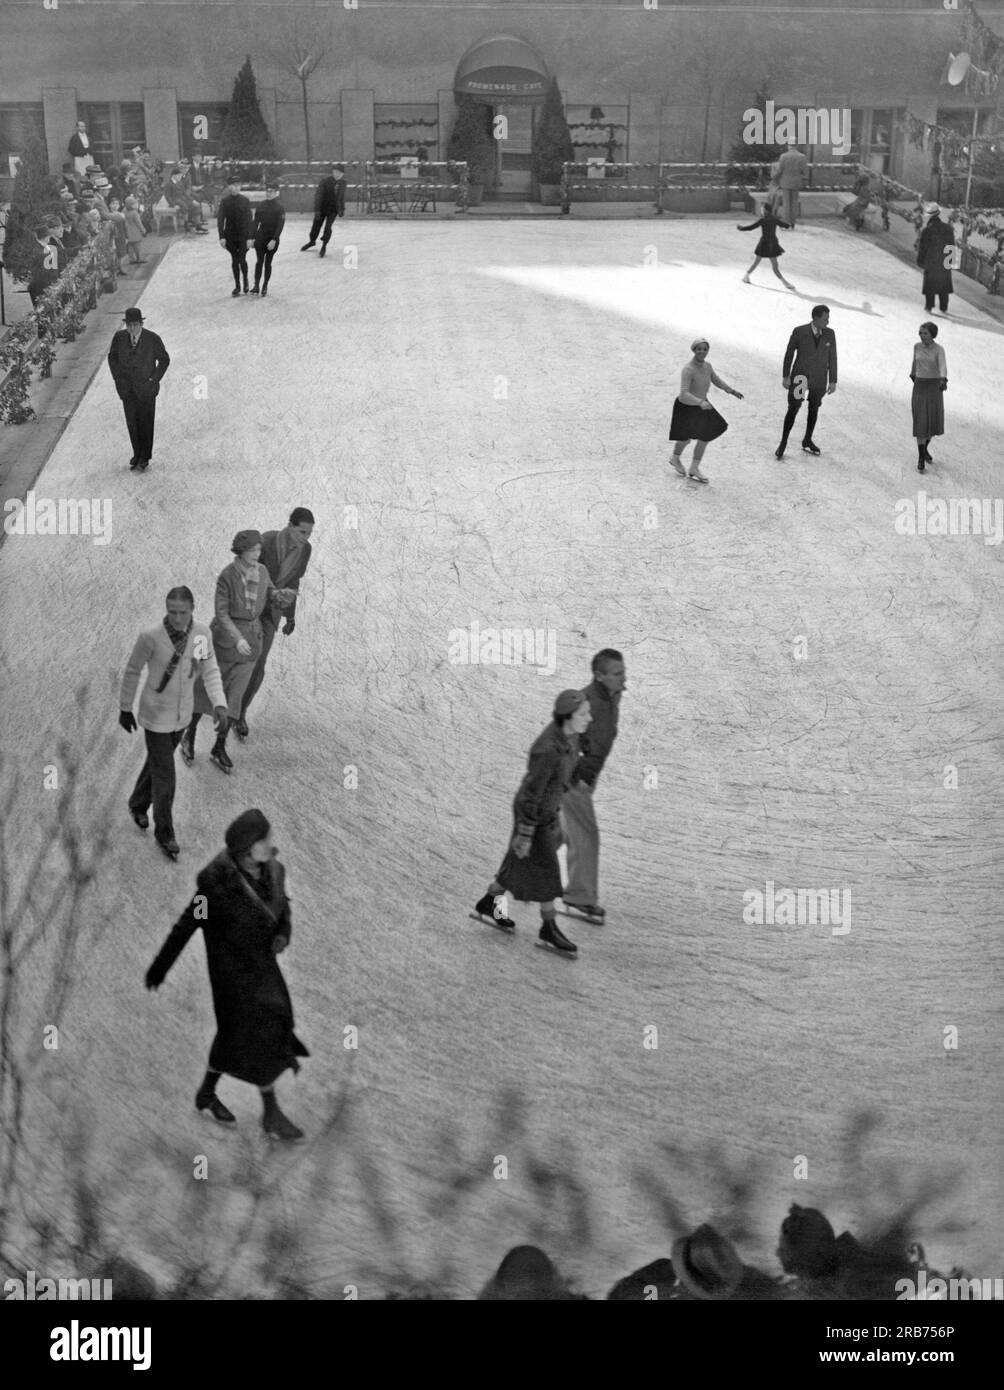 New York, New York:  c. 1936. People ice skating at the Rockefeller Center Plaza. Stock Photo